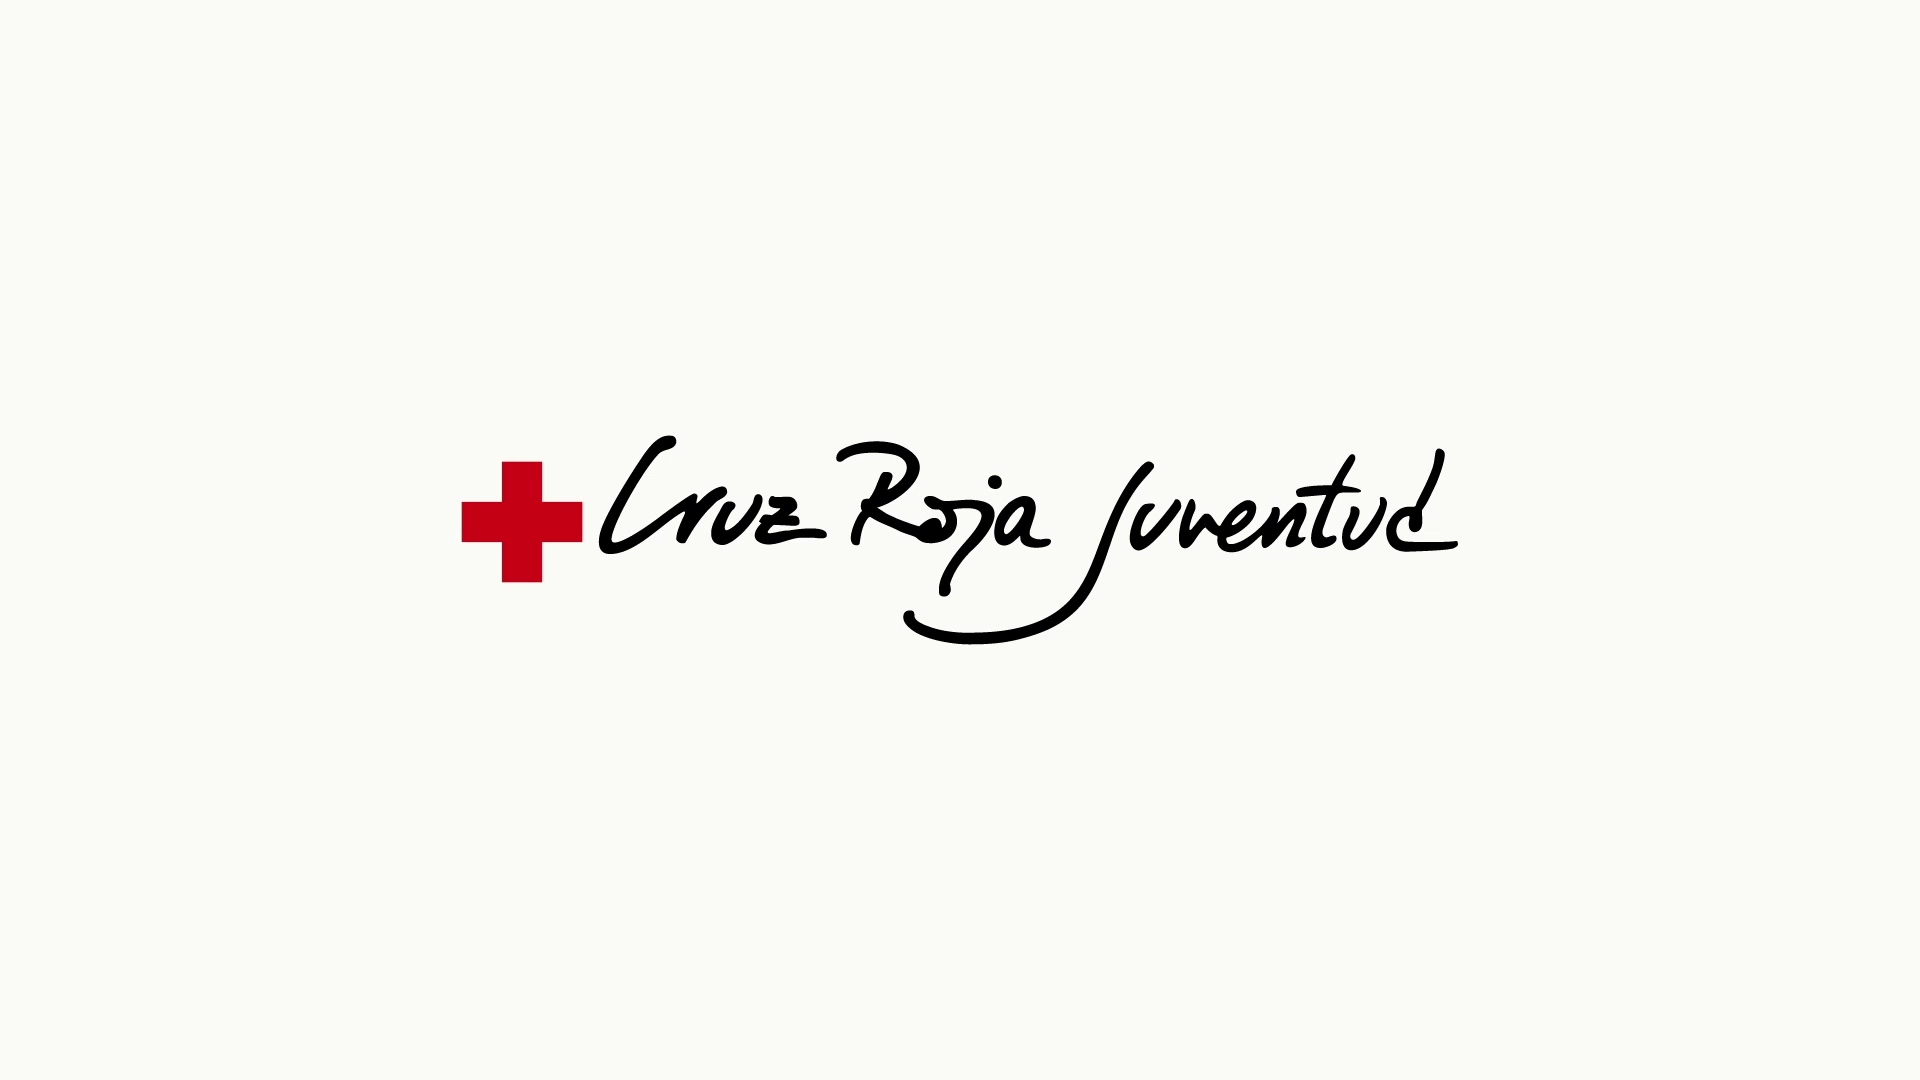 ficcion-Cruz Roja - Concurso 8M